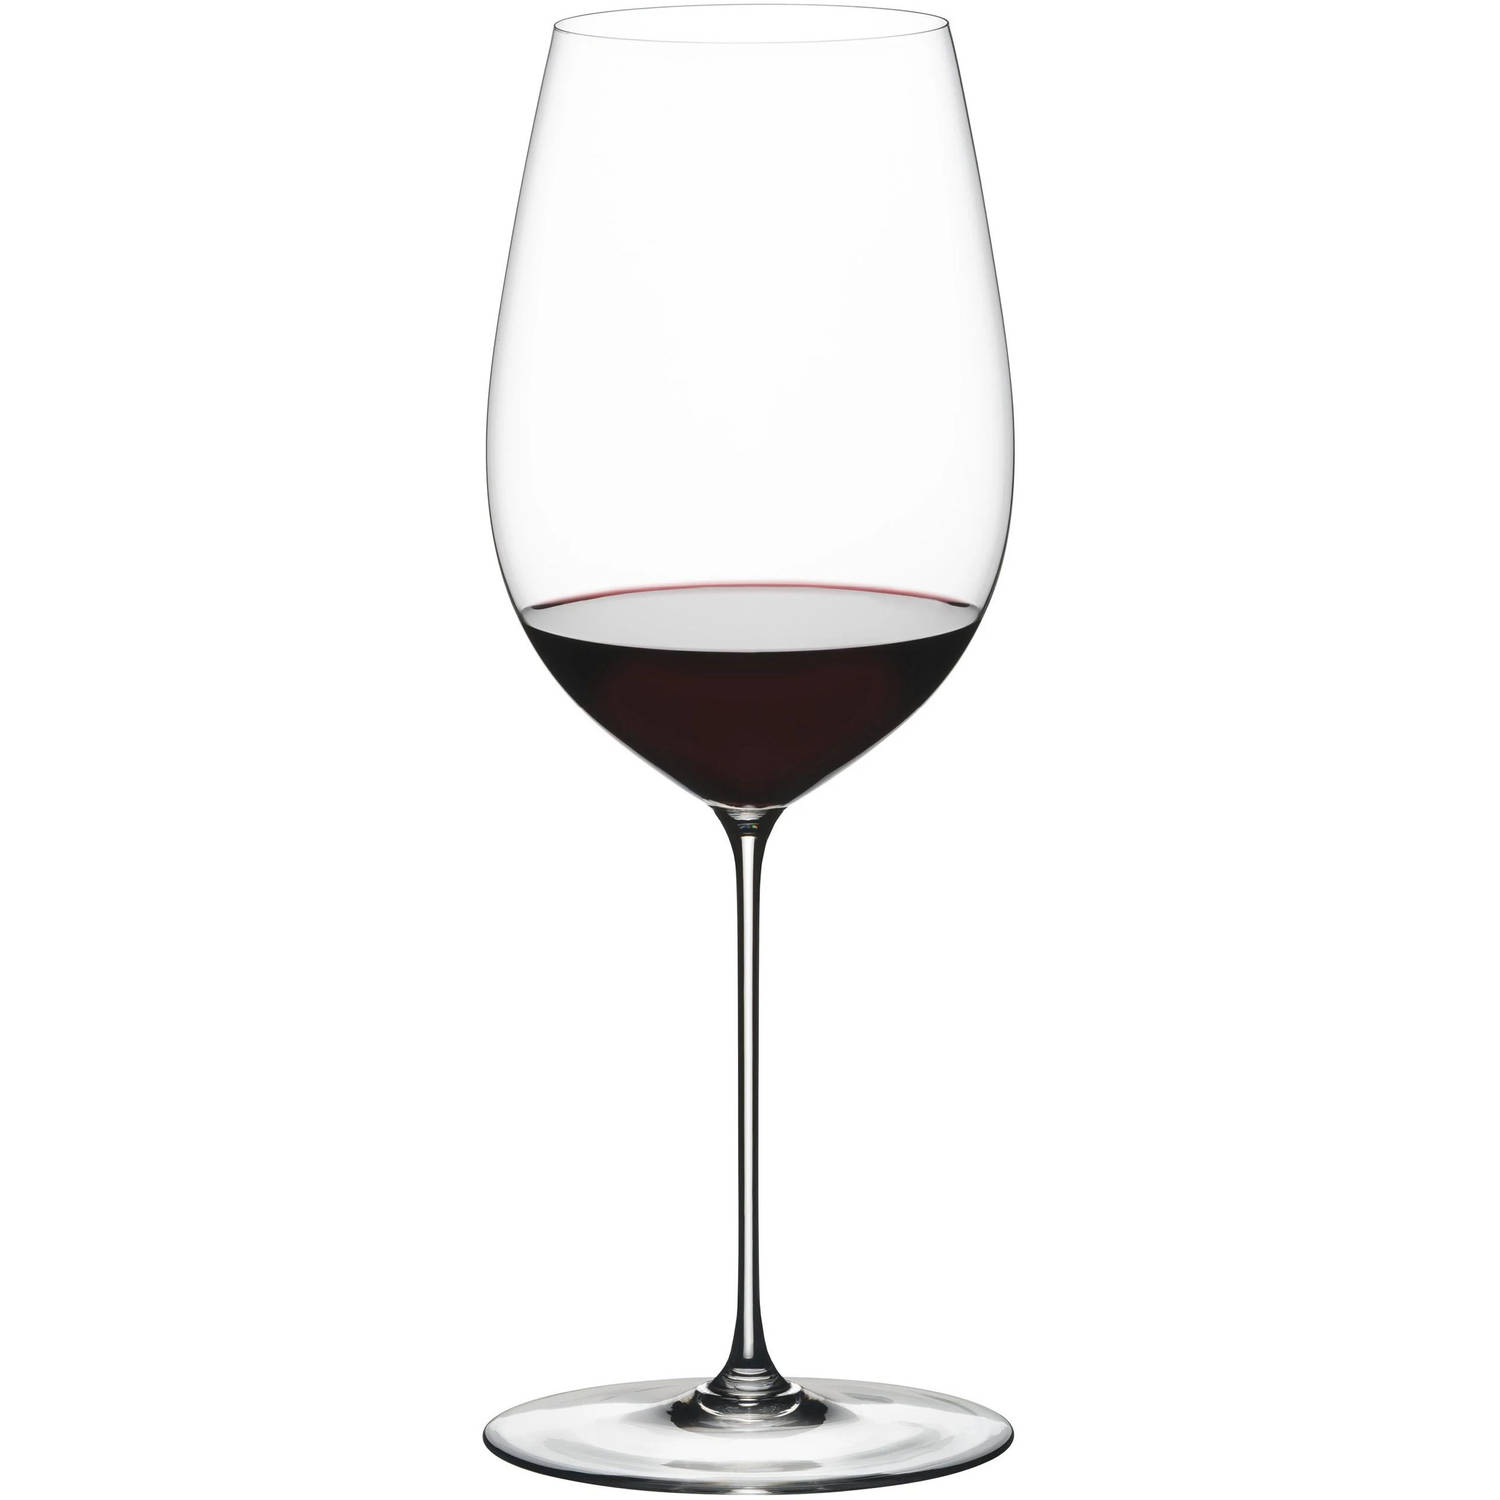 Riedel Rode Wijnglas Superleggero Bordeaux Grand Cru